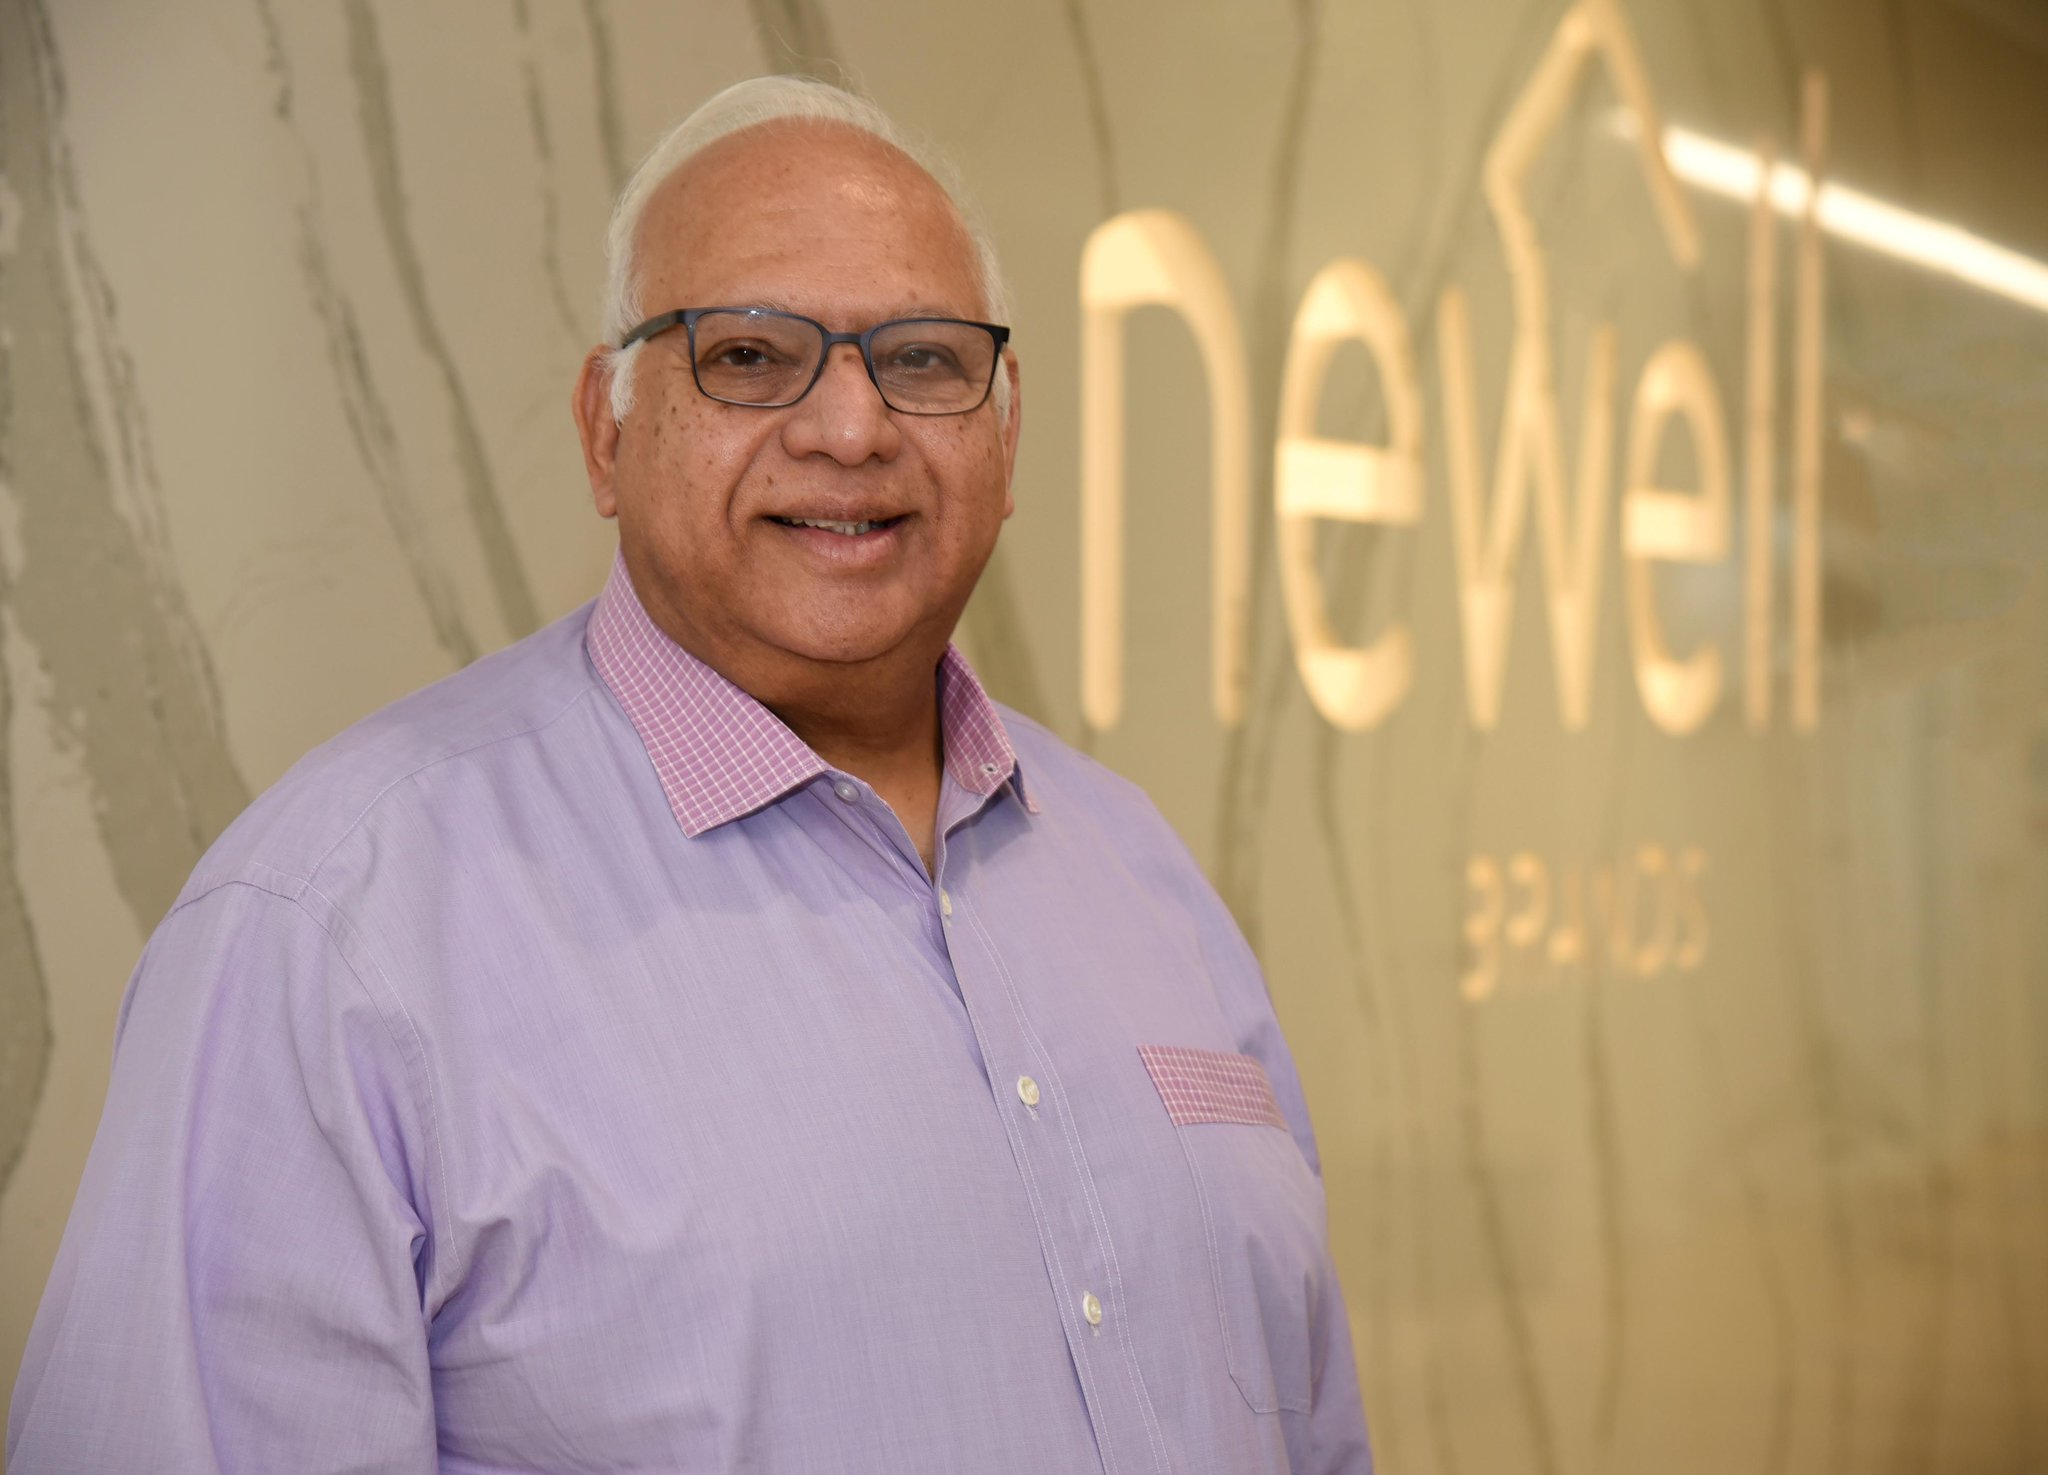 Ravi Saligram, CEO of Newell Brands, at the company’s headquarters in metro Atlanta in 2020. (Photo by Joann Vitelli)